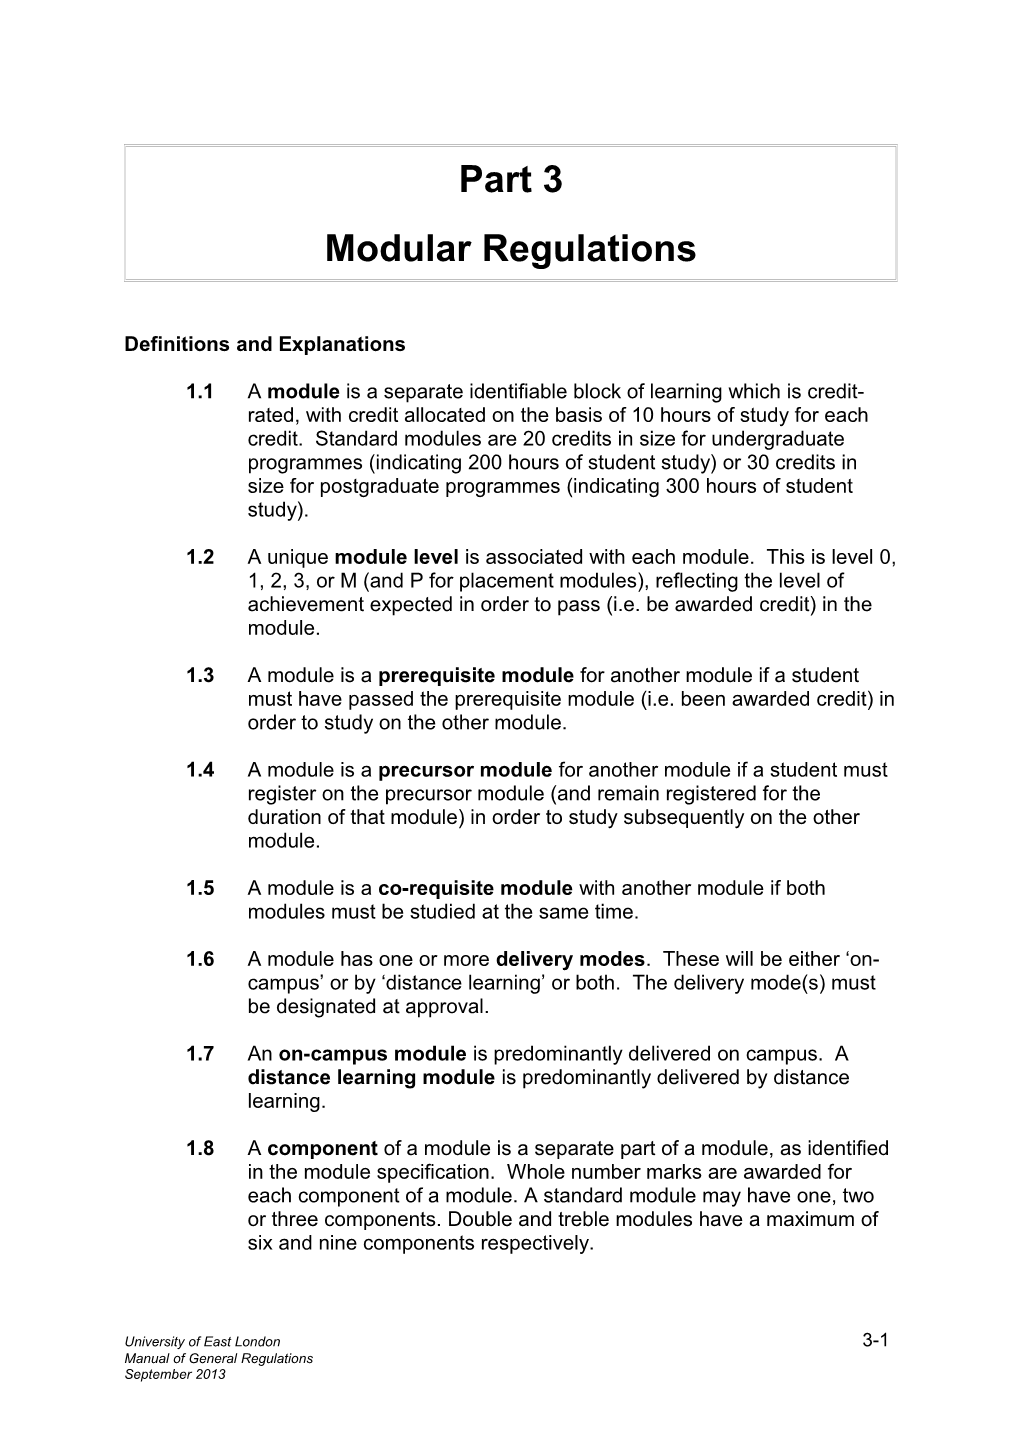 Modular Regulations